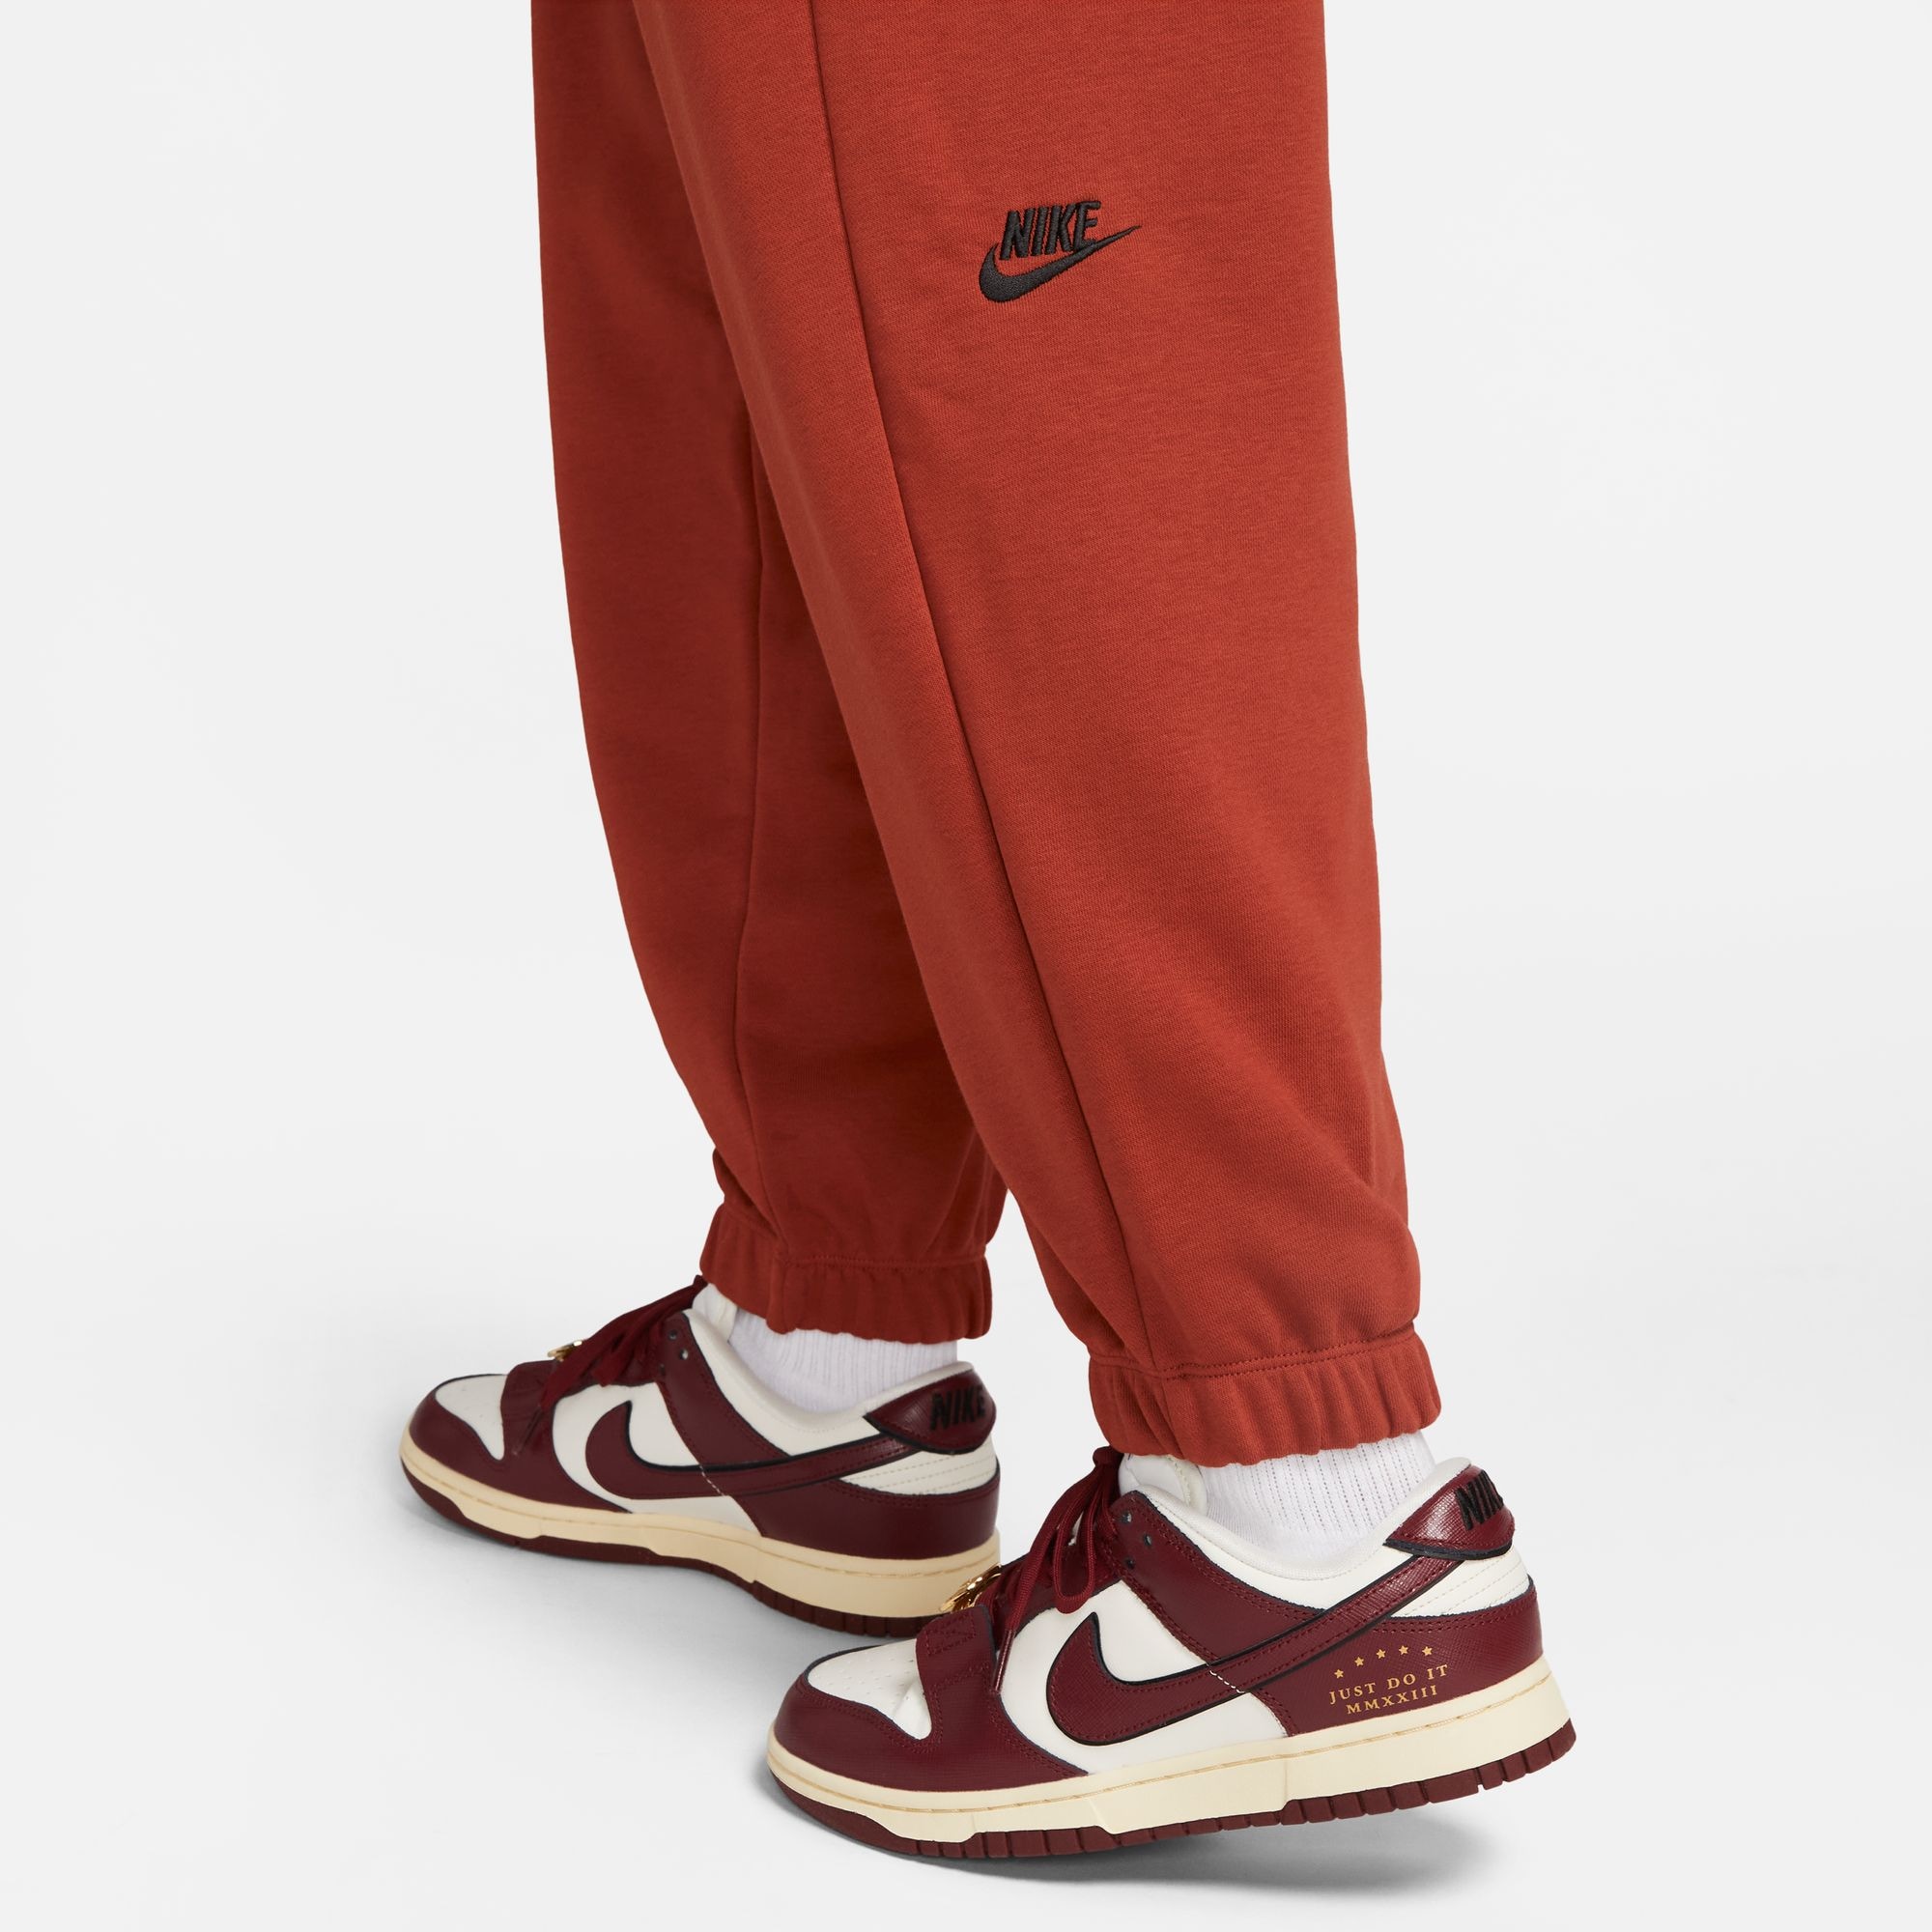 auf »W bestellen Jogginghose OS Nike BAUR | HR SW« Rechnung Sportswear NSW JOGGER FT